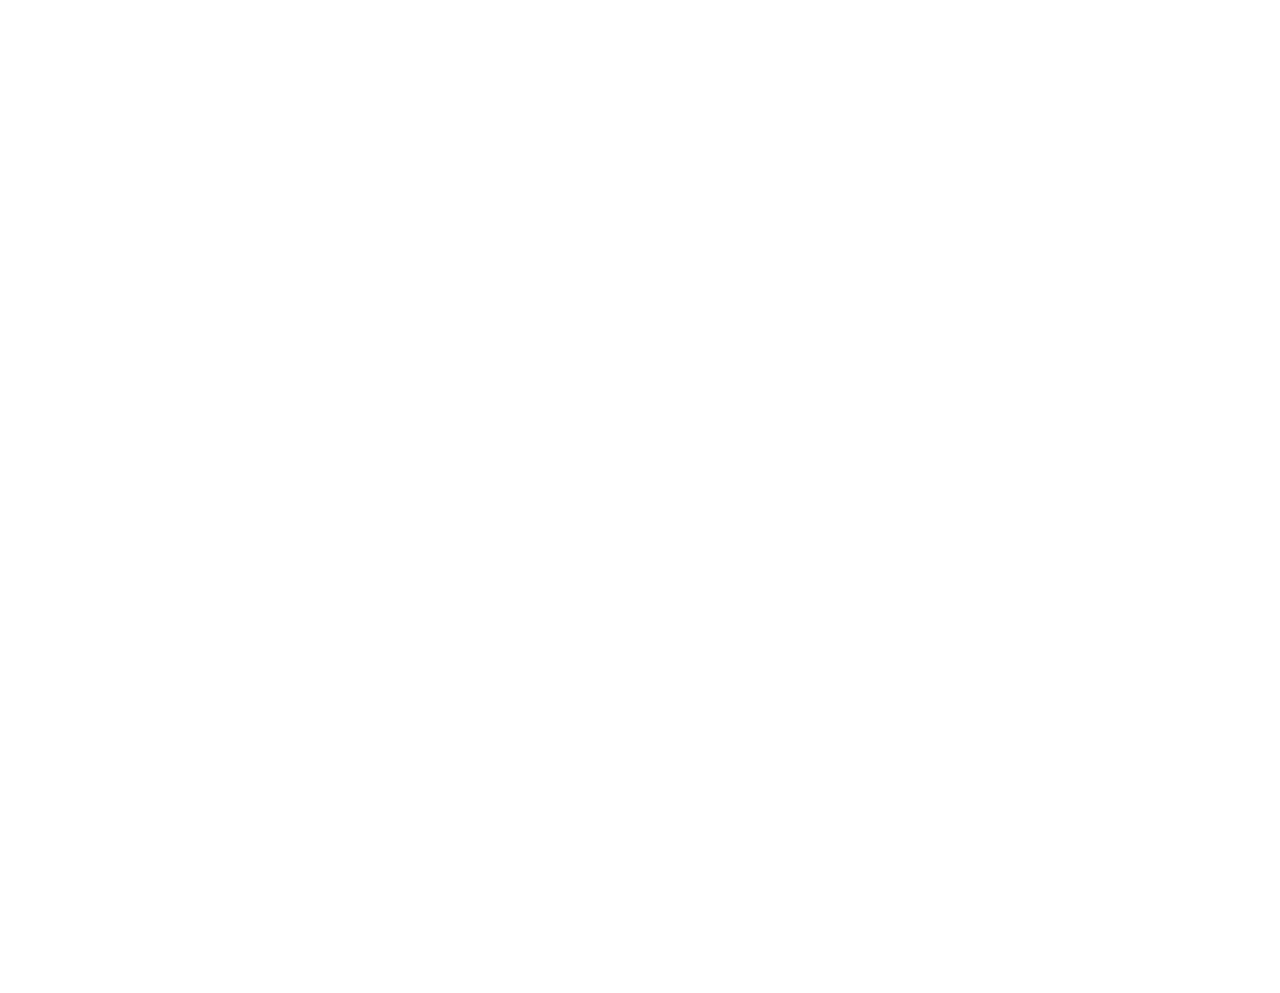 SPARKLING CLEAN SOLUTIONS LLC's logo